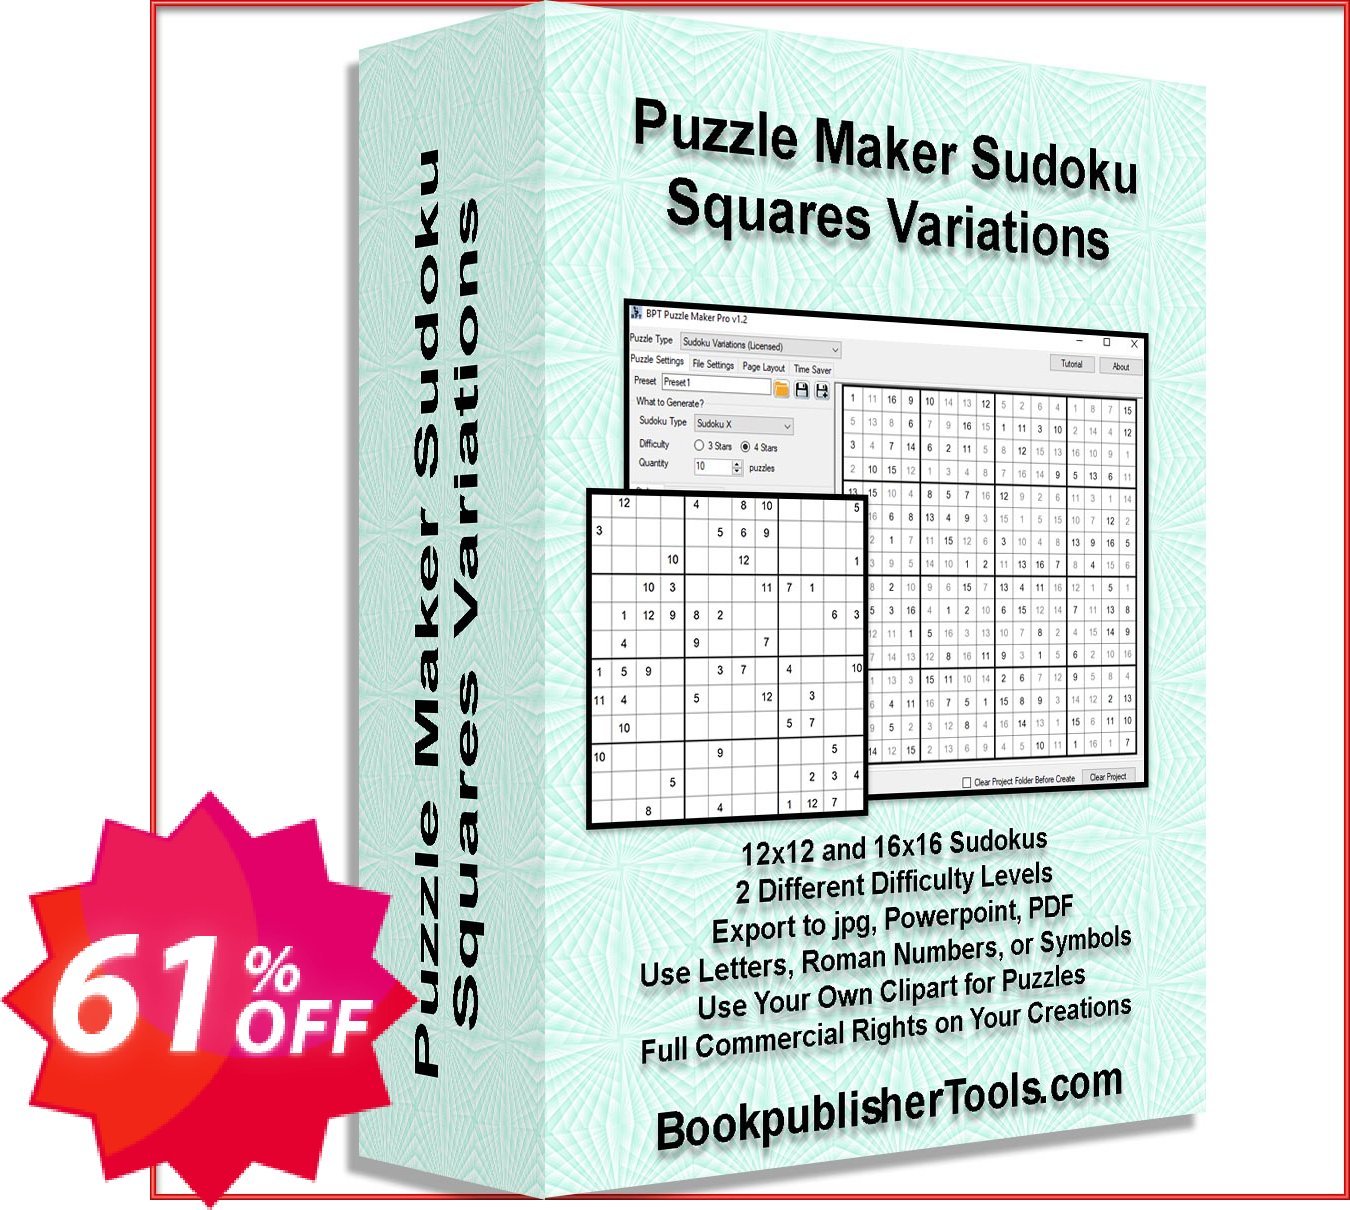 Puzzle Maker Sudoku Squares Variations Coupon code 61% discount 